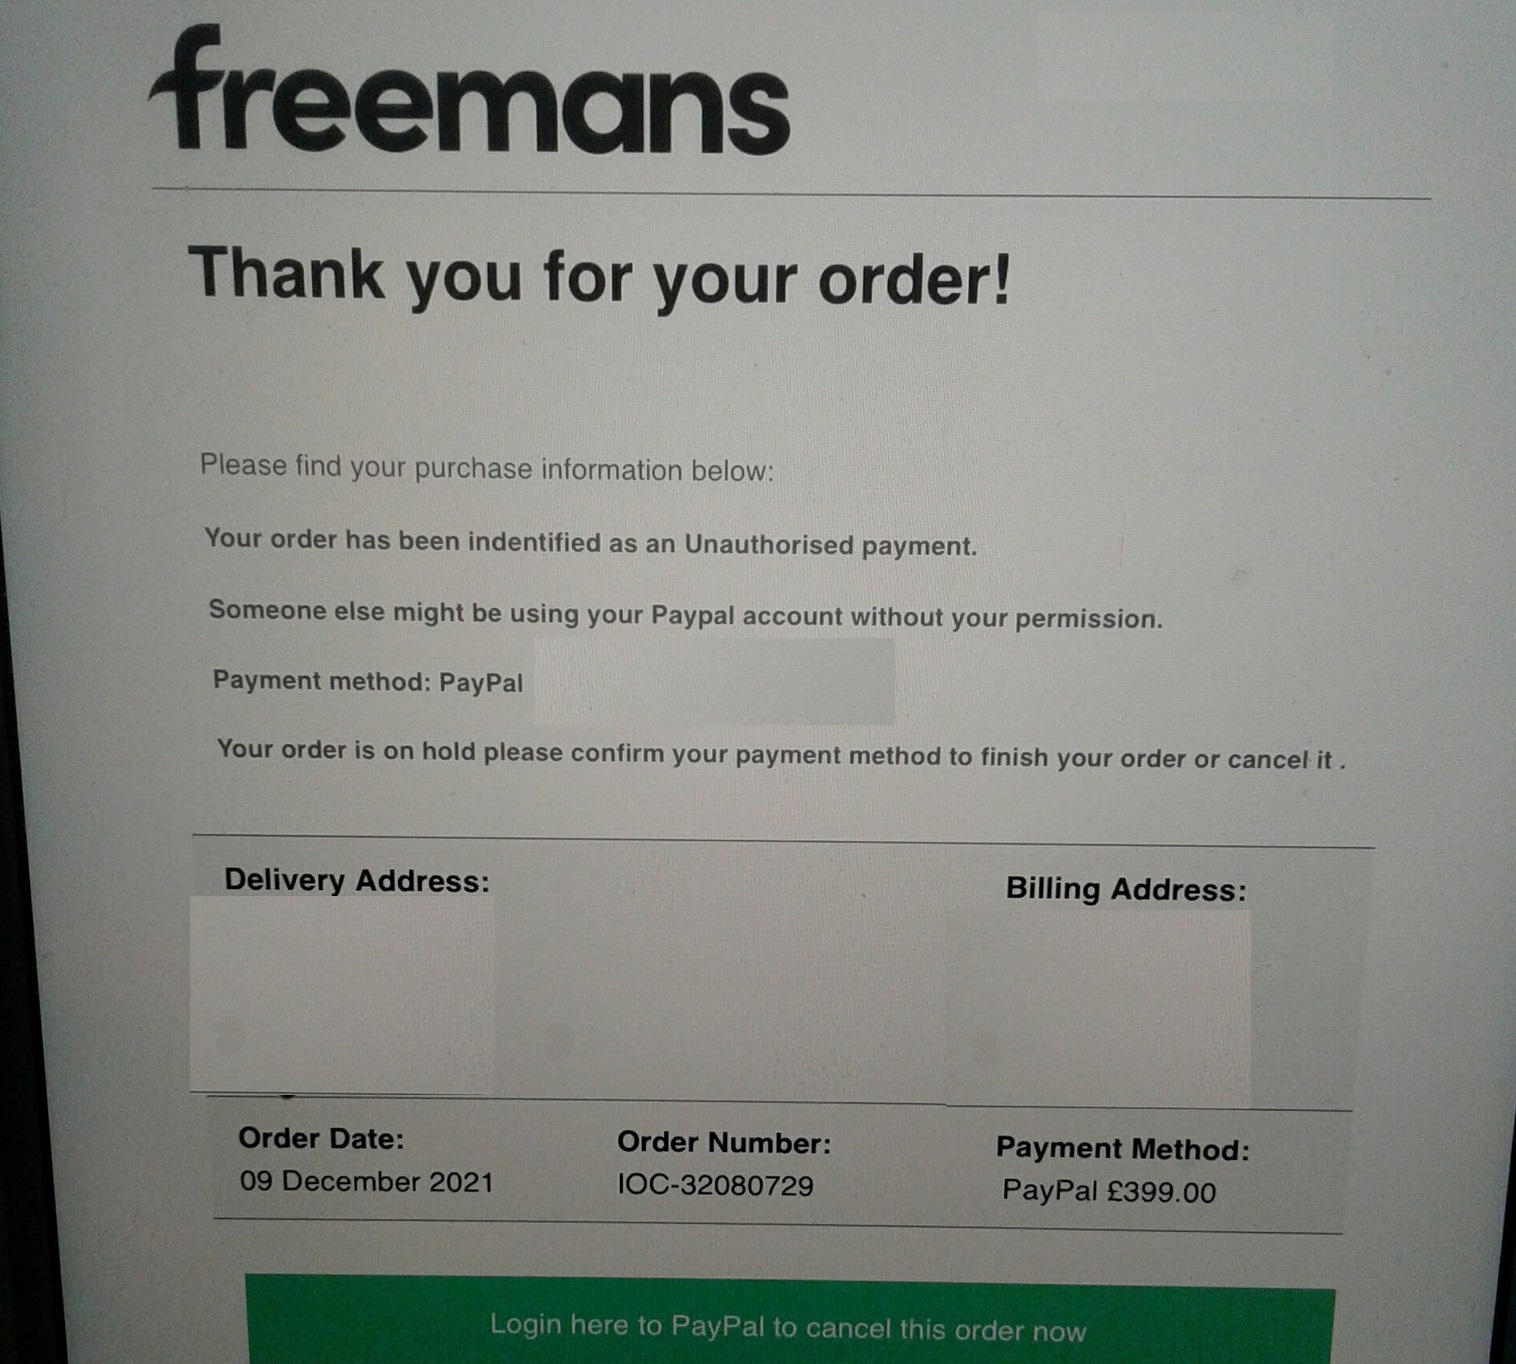 freemans scam email, freemans phishing email, orders@freemansorder.com, confirmation@freemansorder.com